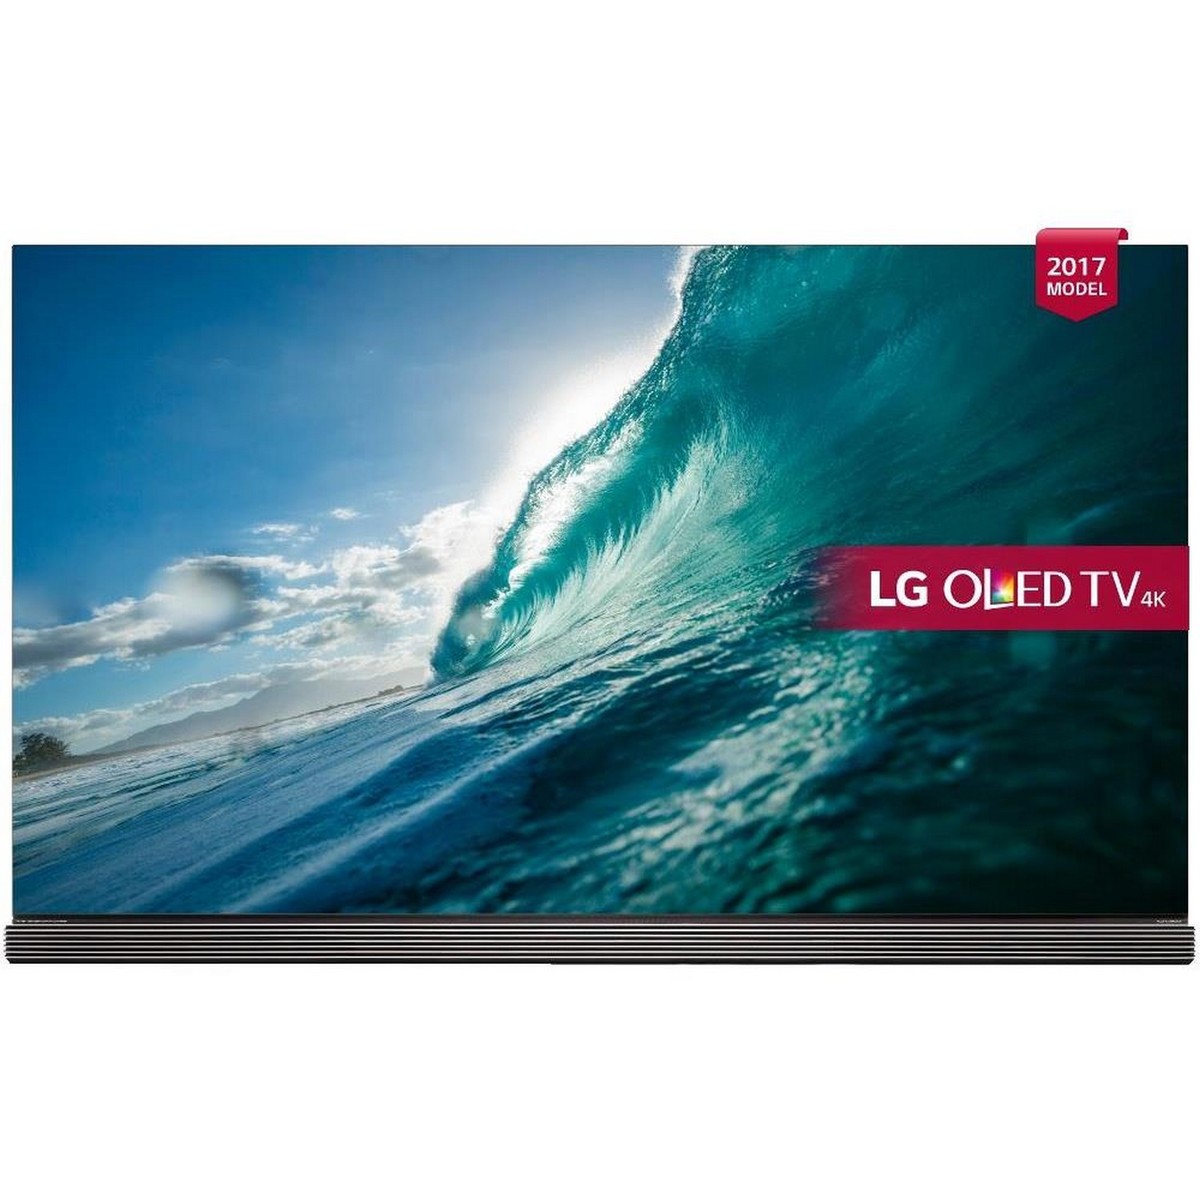 LG Ultra HD 4K Smart OLED TV OLED65G7V 65inch